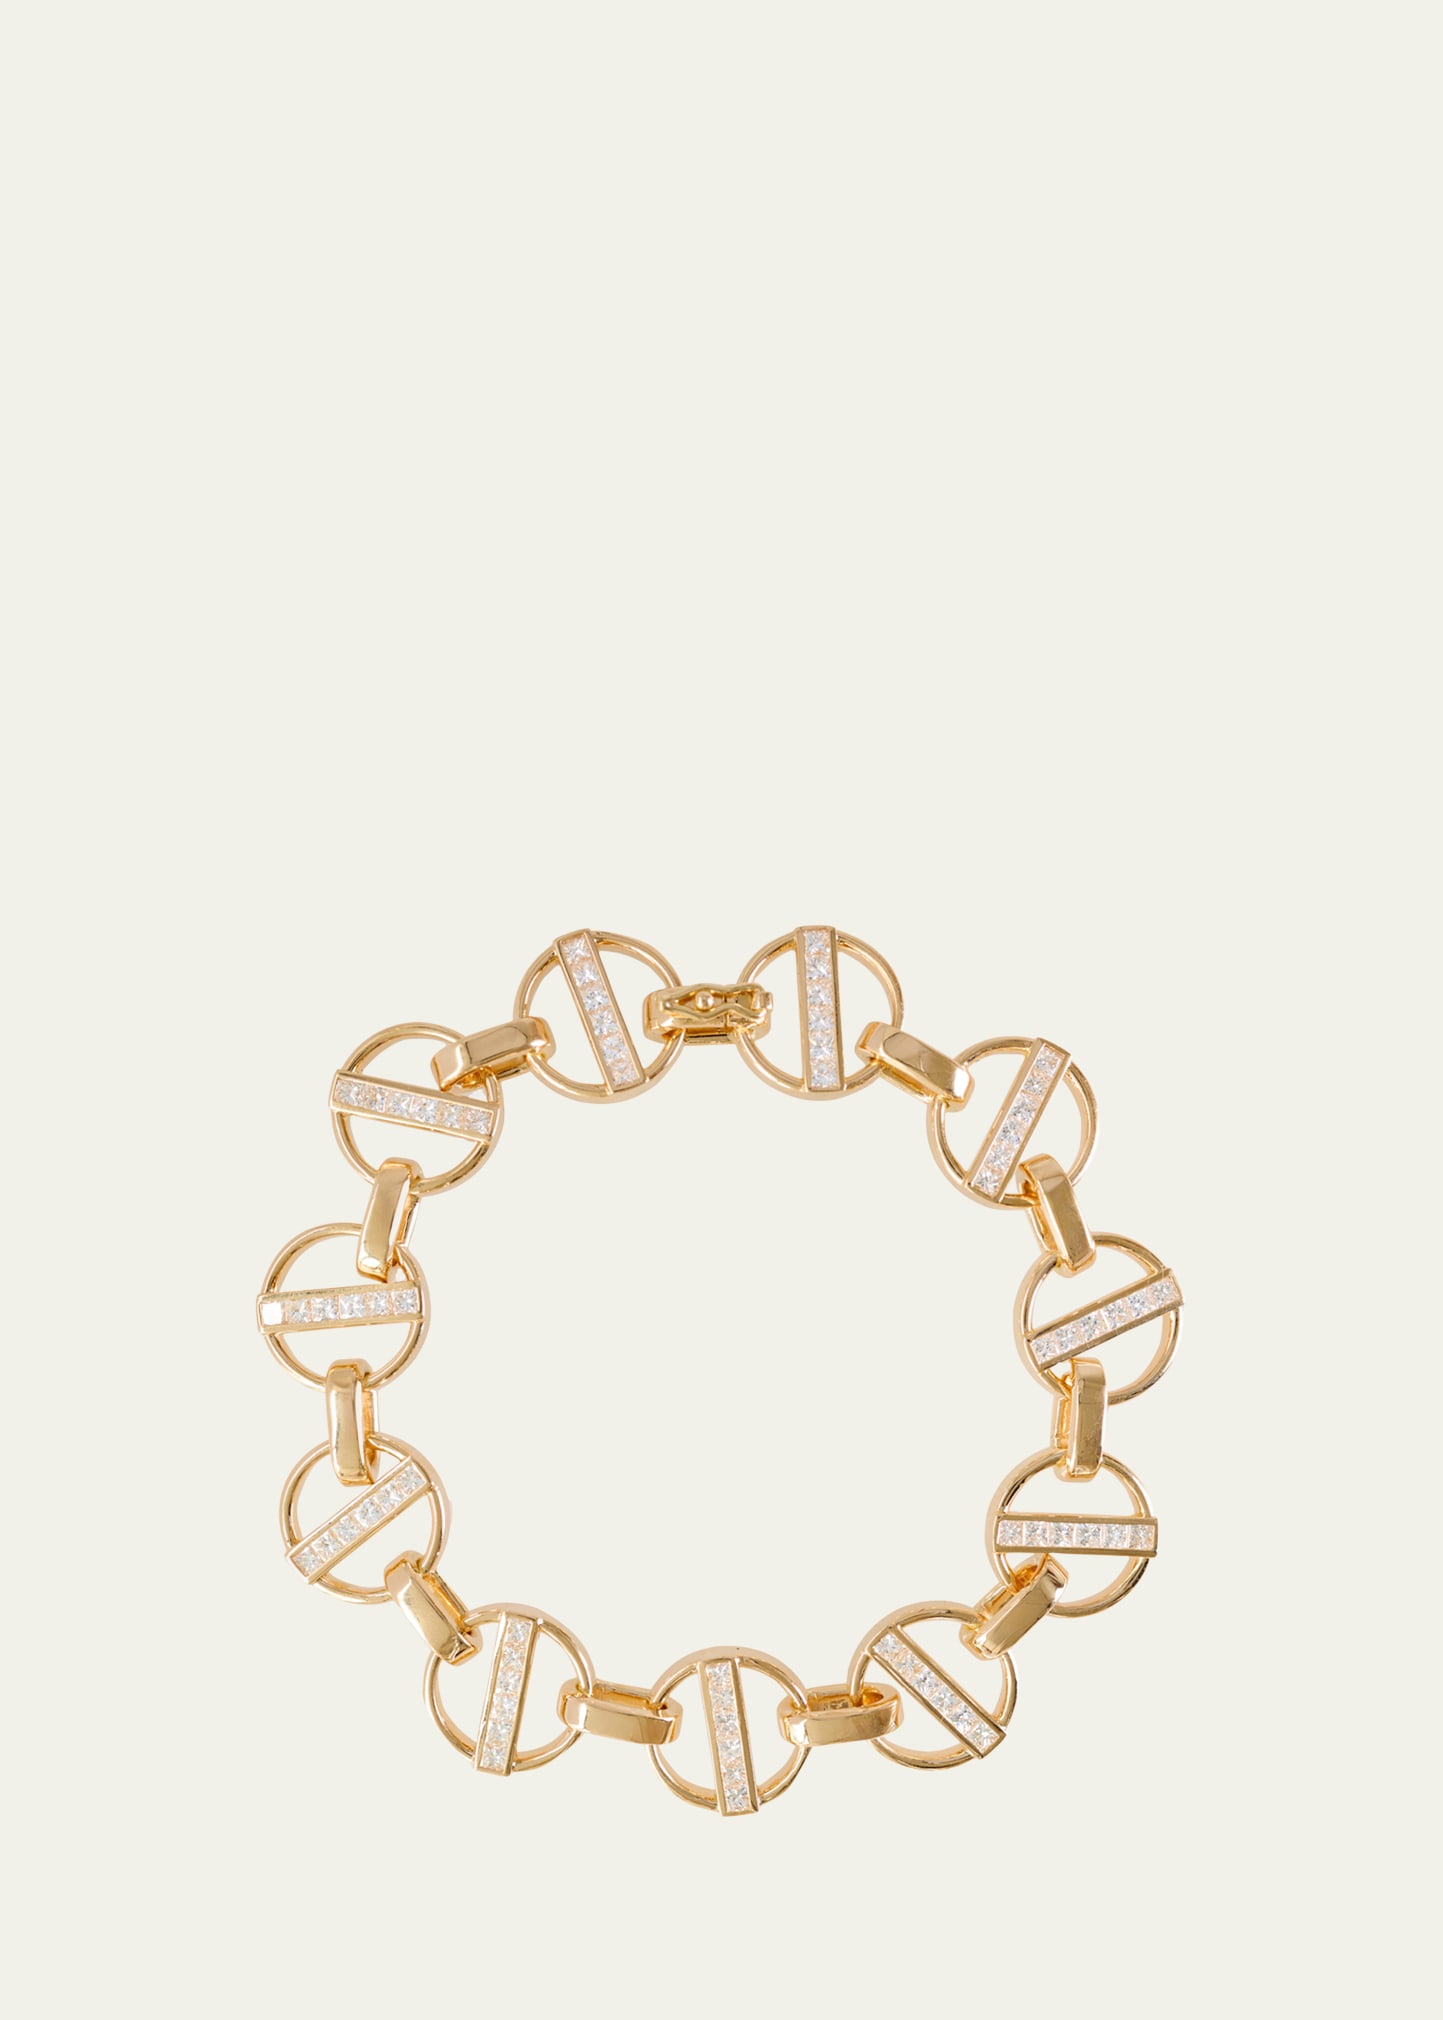 18K Gold and Diamond Orbit Link Bracelet, 7.25"